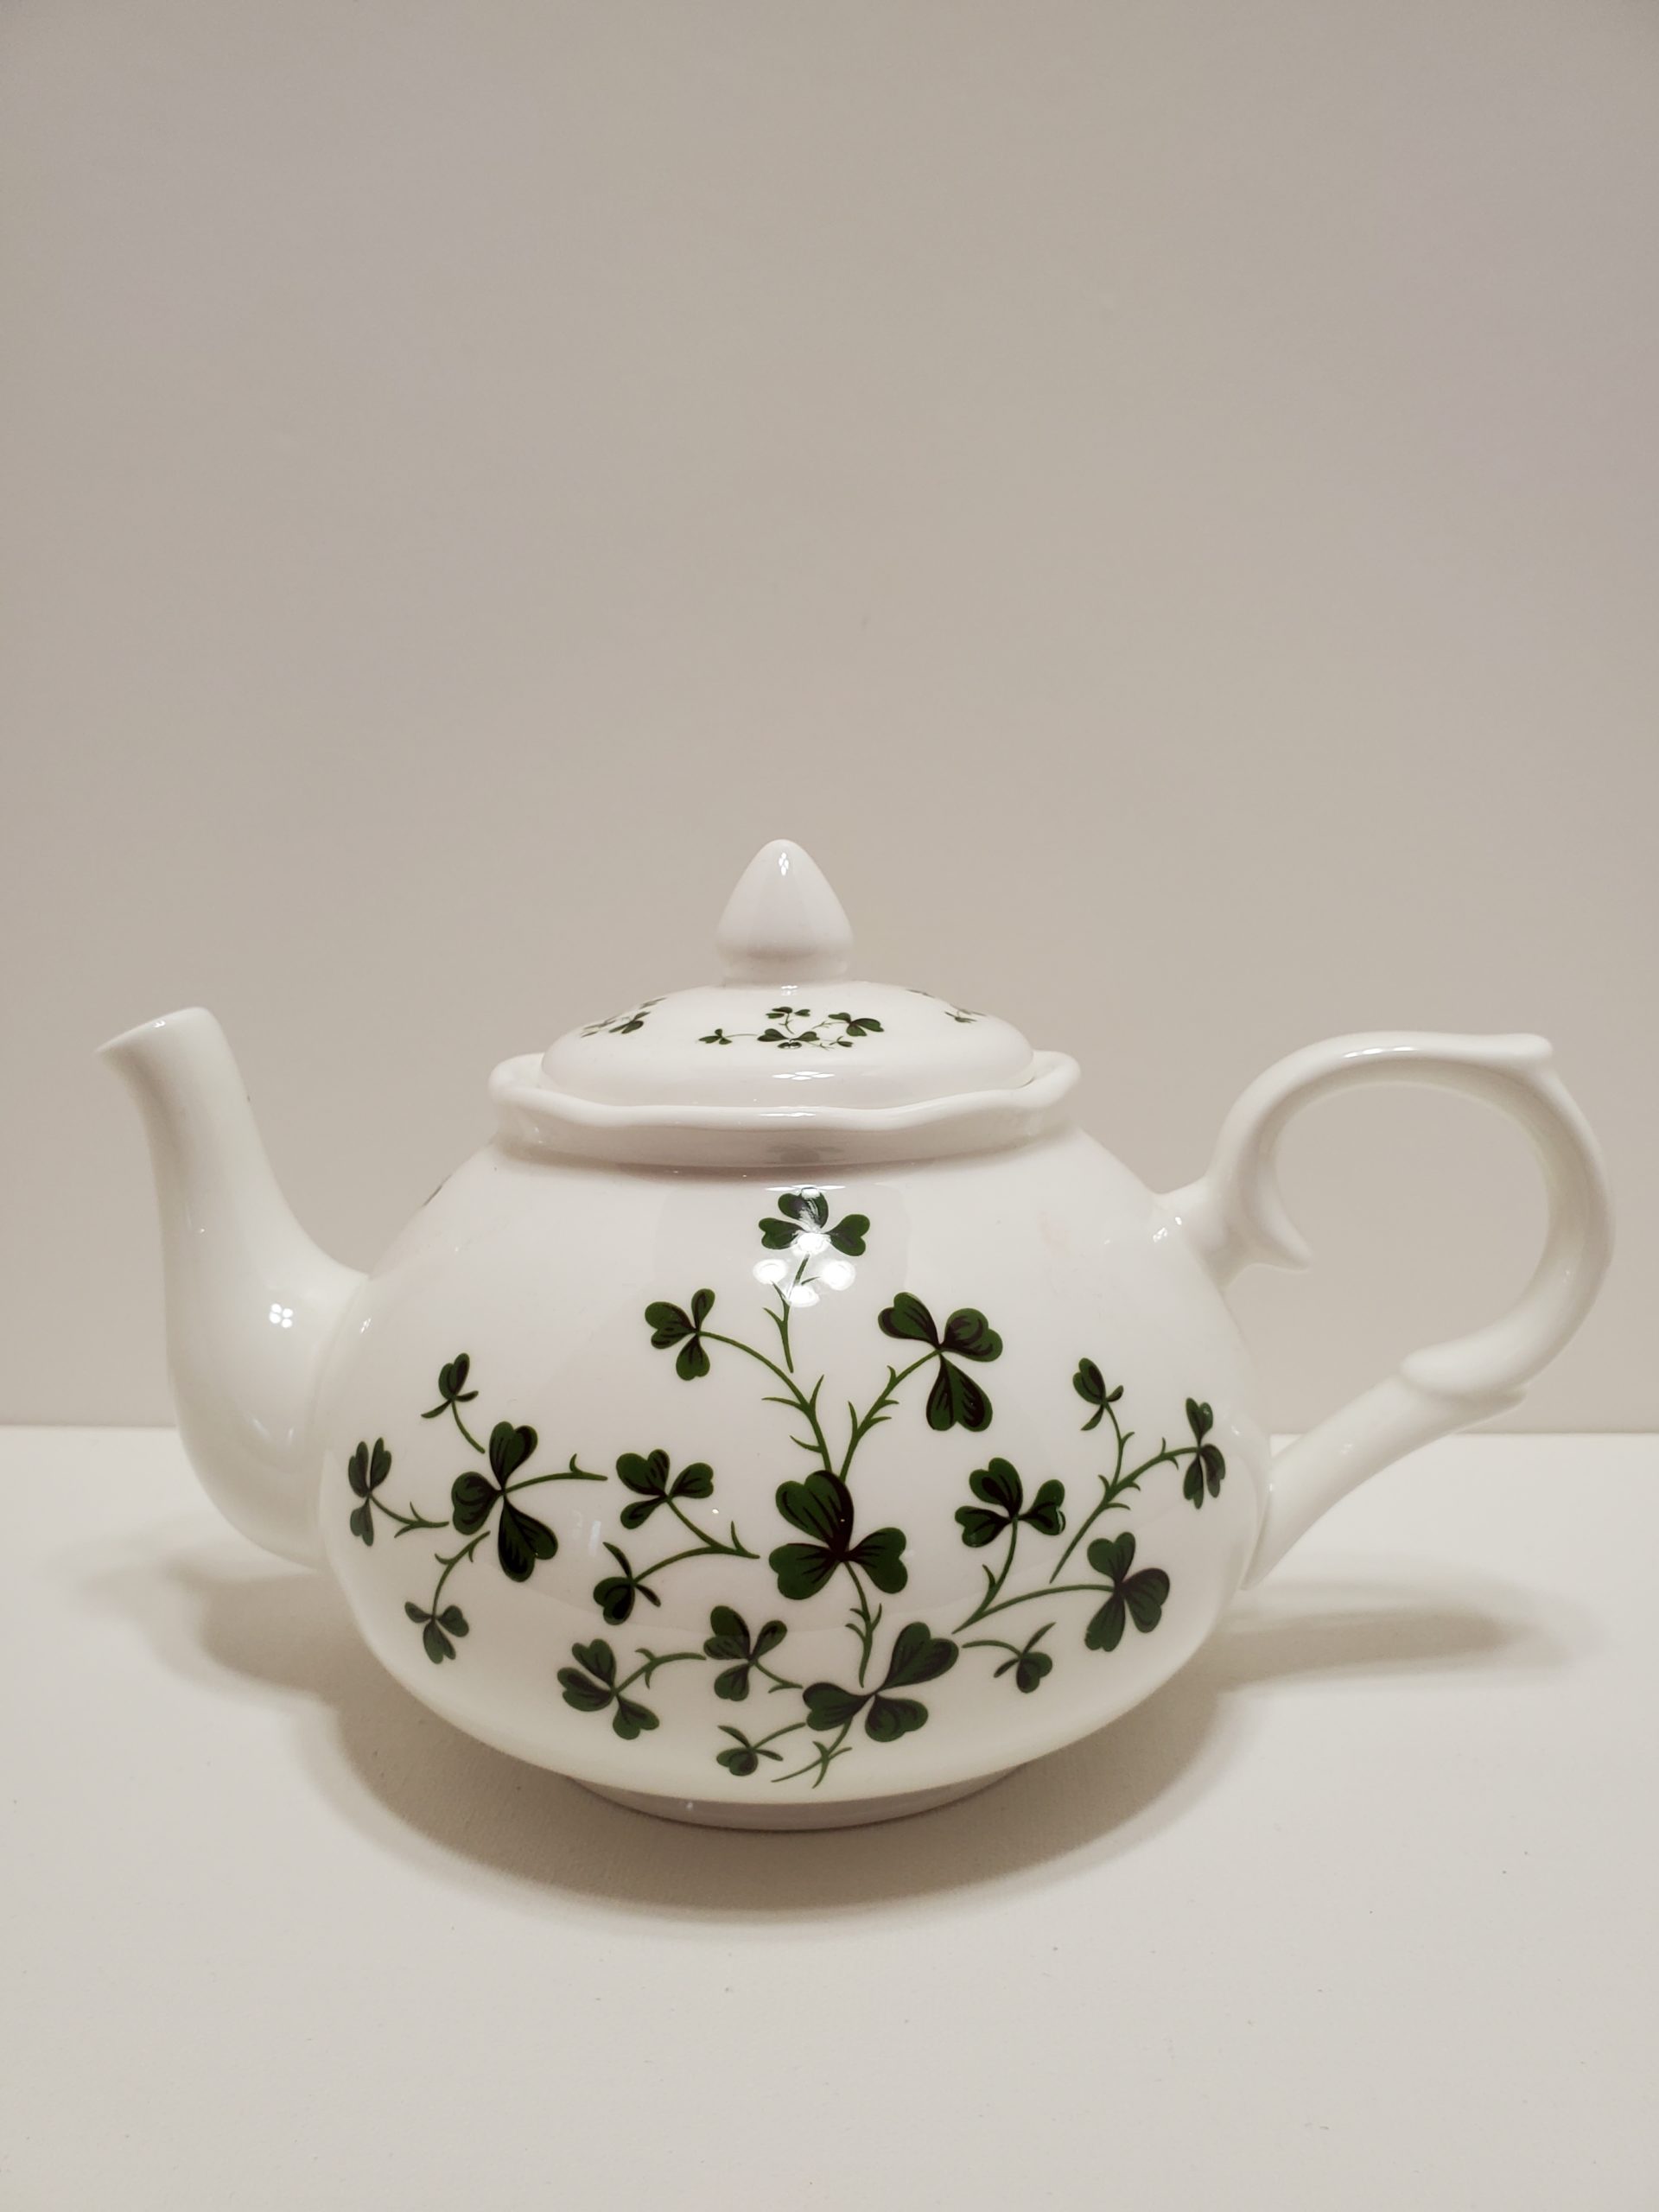 http://teaandwhimsey.com/wp-content/uploads/2017/12/Shamrock-Teapot-1-scaled.jpg